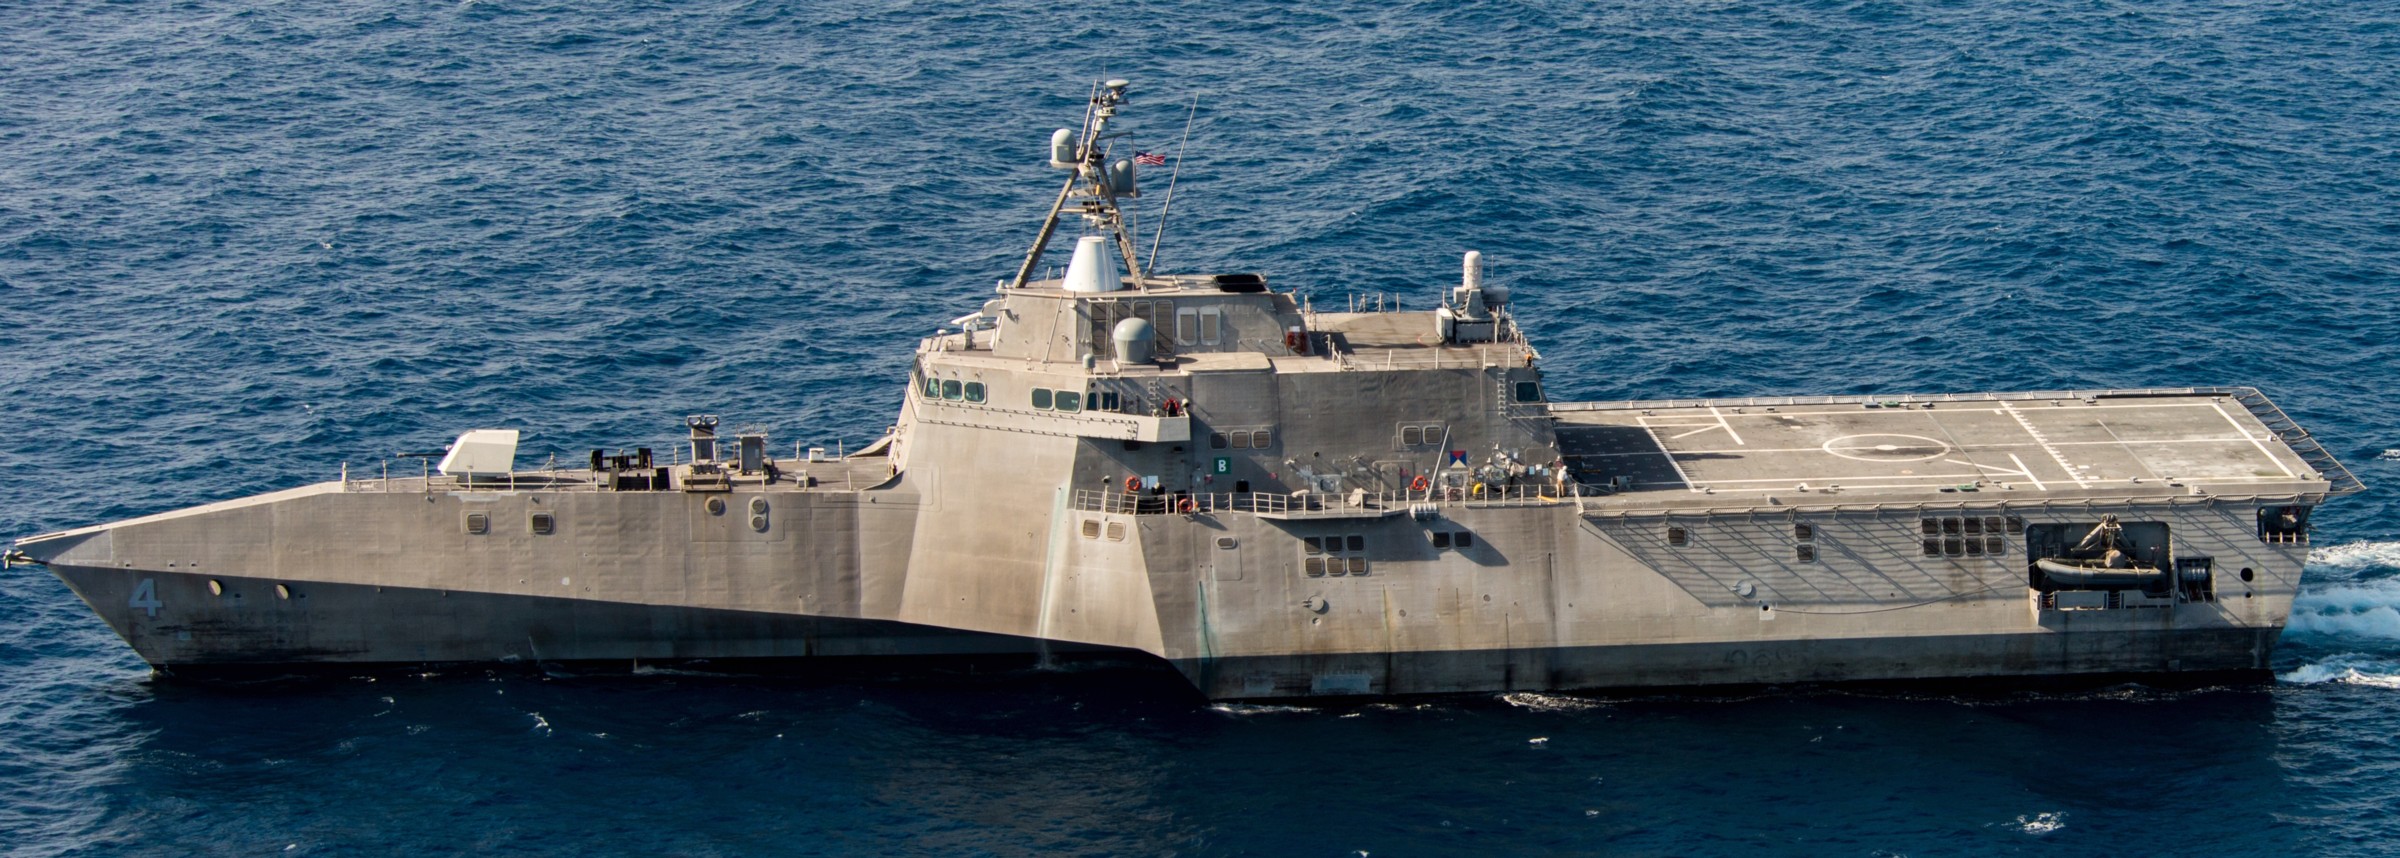 lcs-4 uss coronado independence class littoral combat ship us navy 33